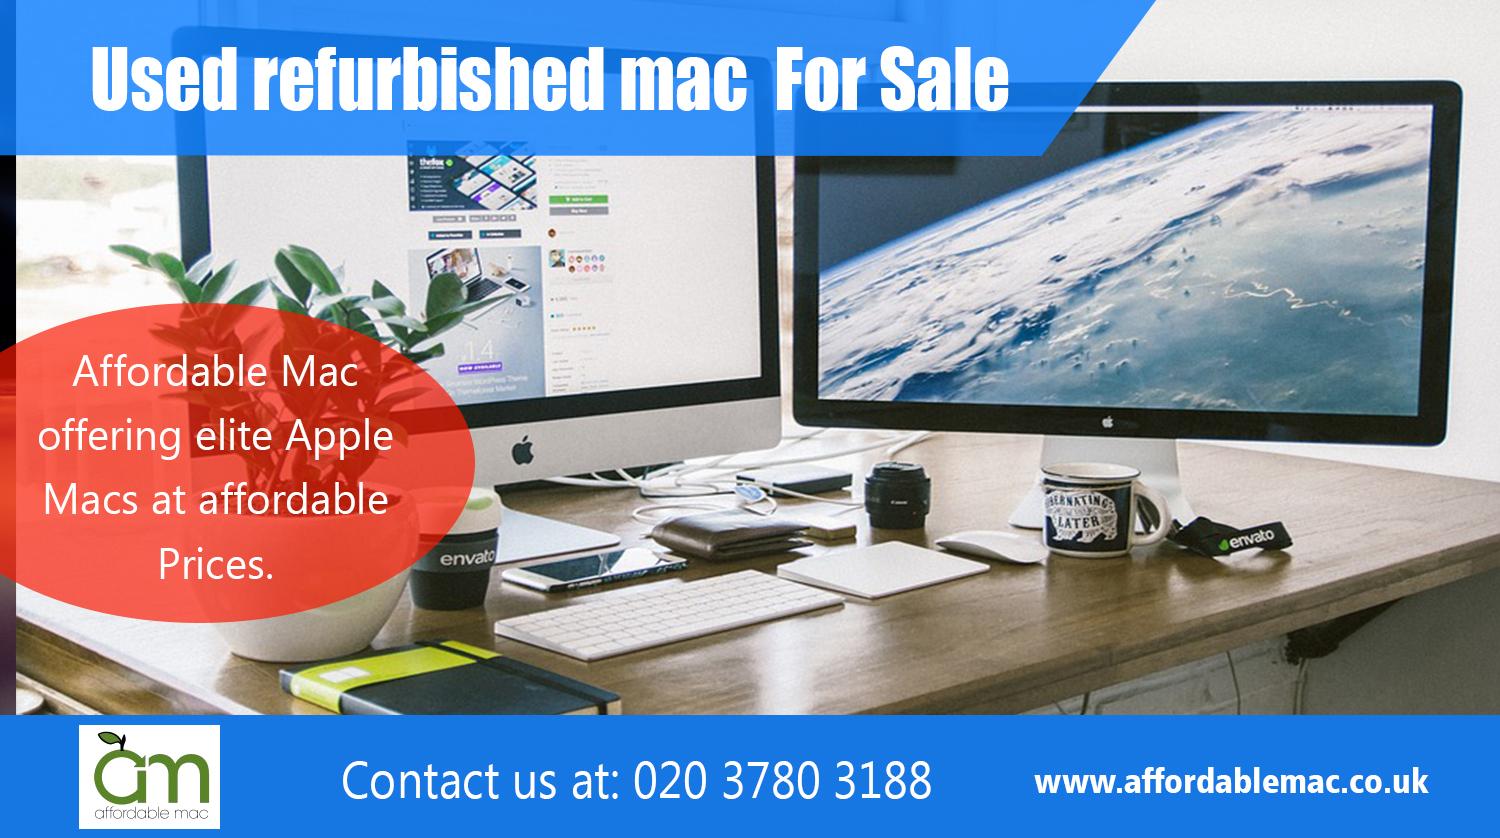 Used refurbished mac For Sale